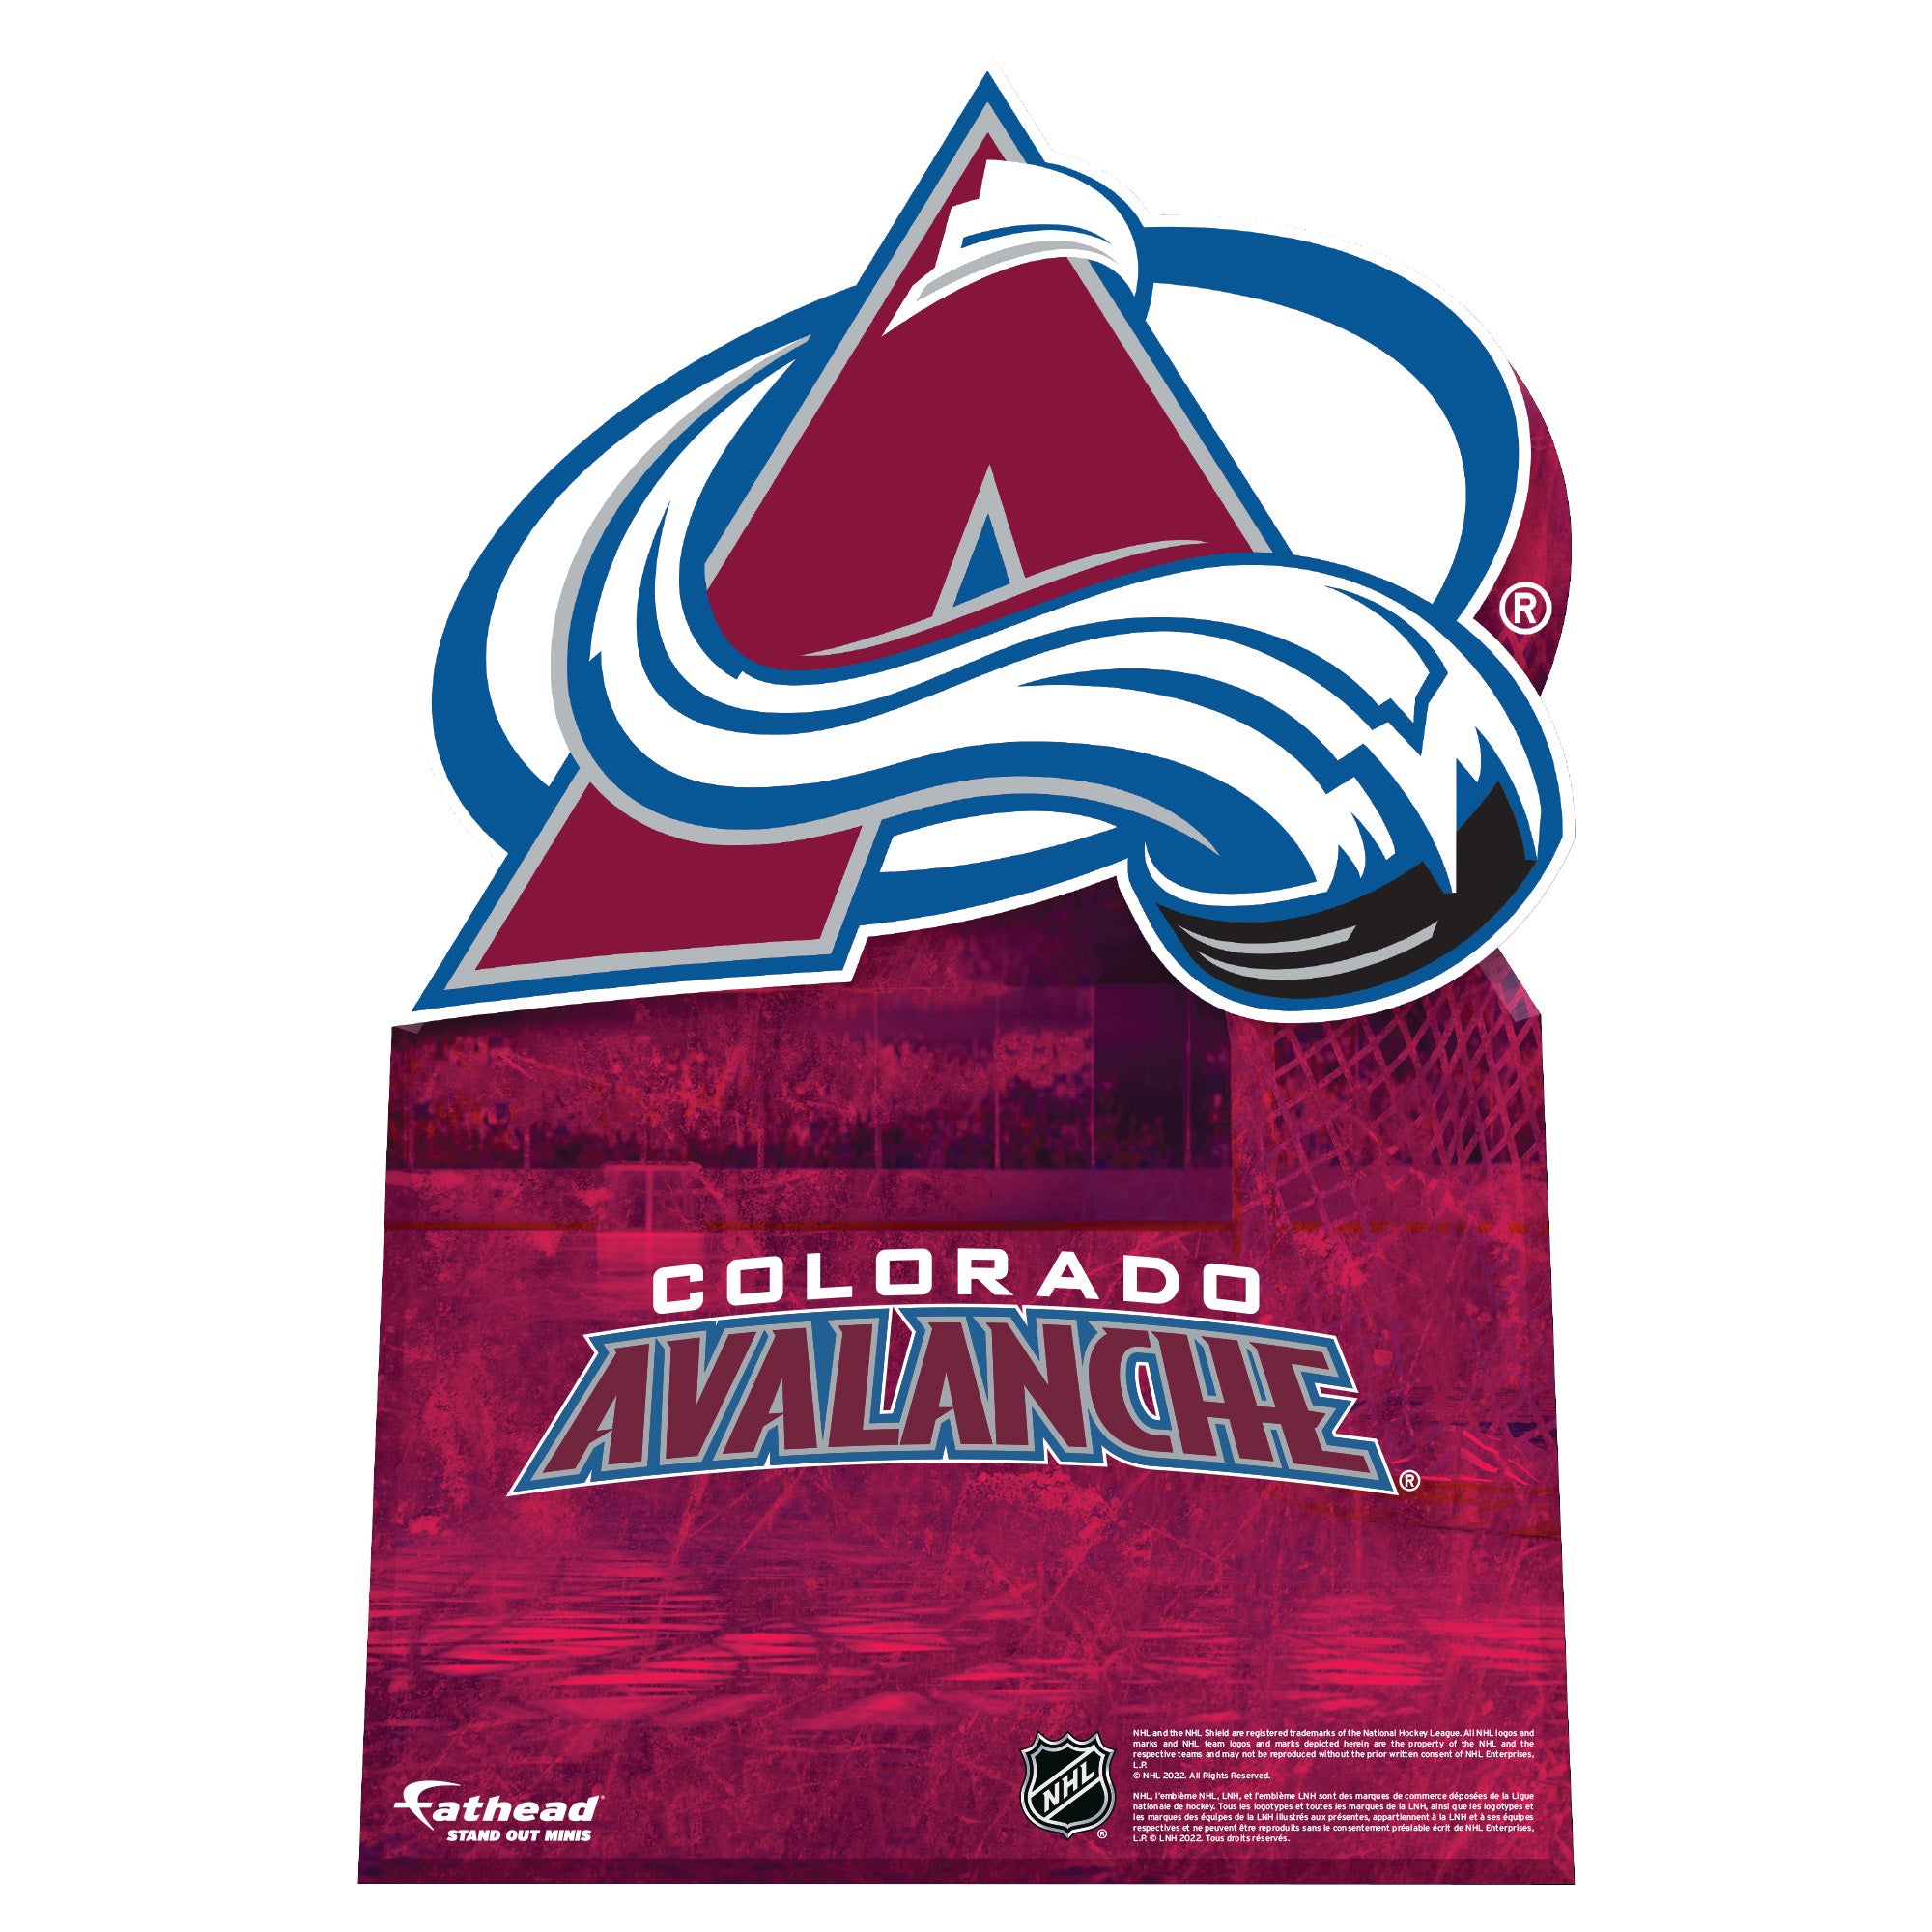 Colorado Avalanche Poster 1  Colorado avalanche, Colorado avalanche logo, Colorado  avalanche hockey